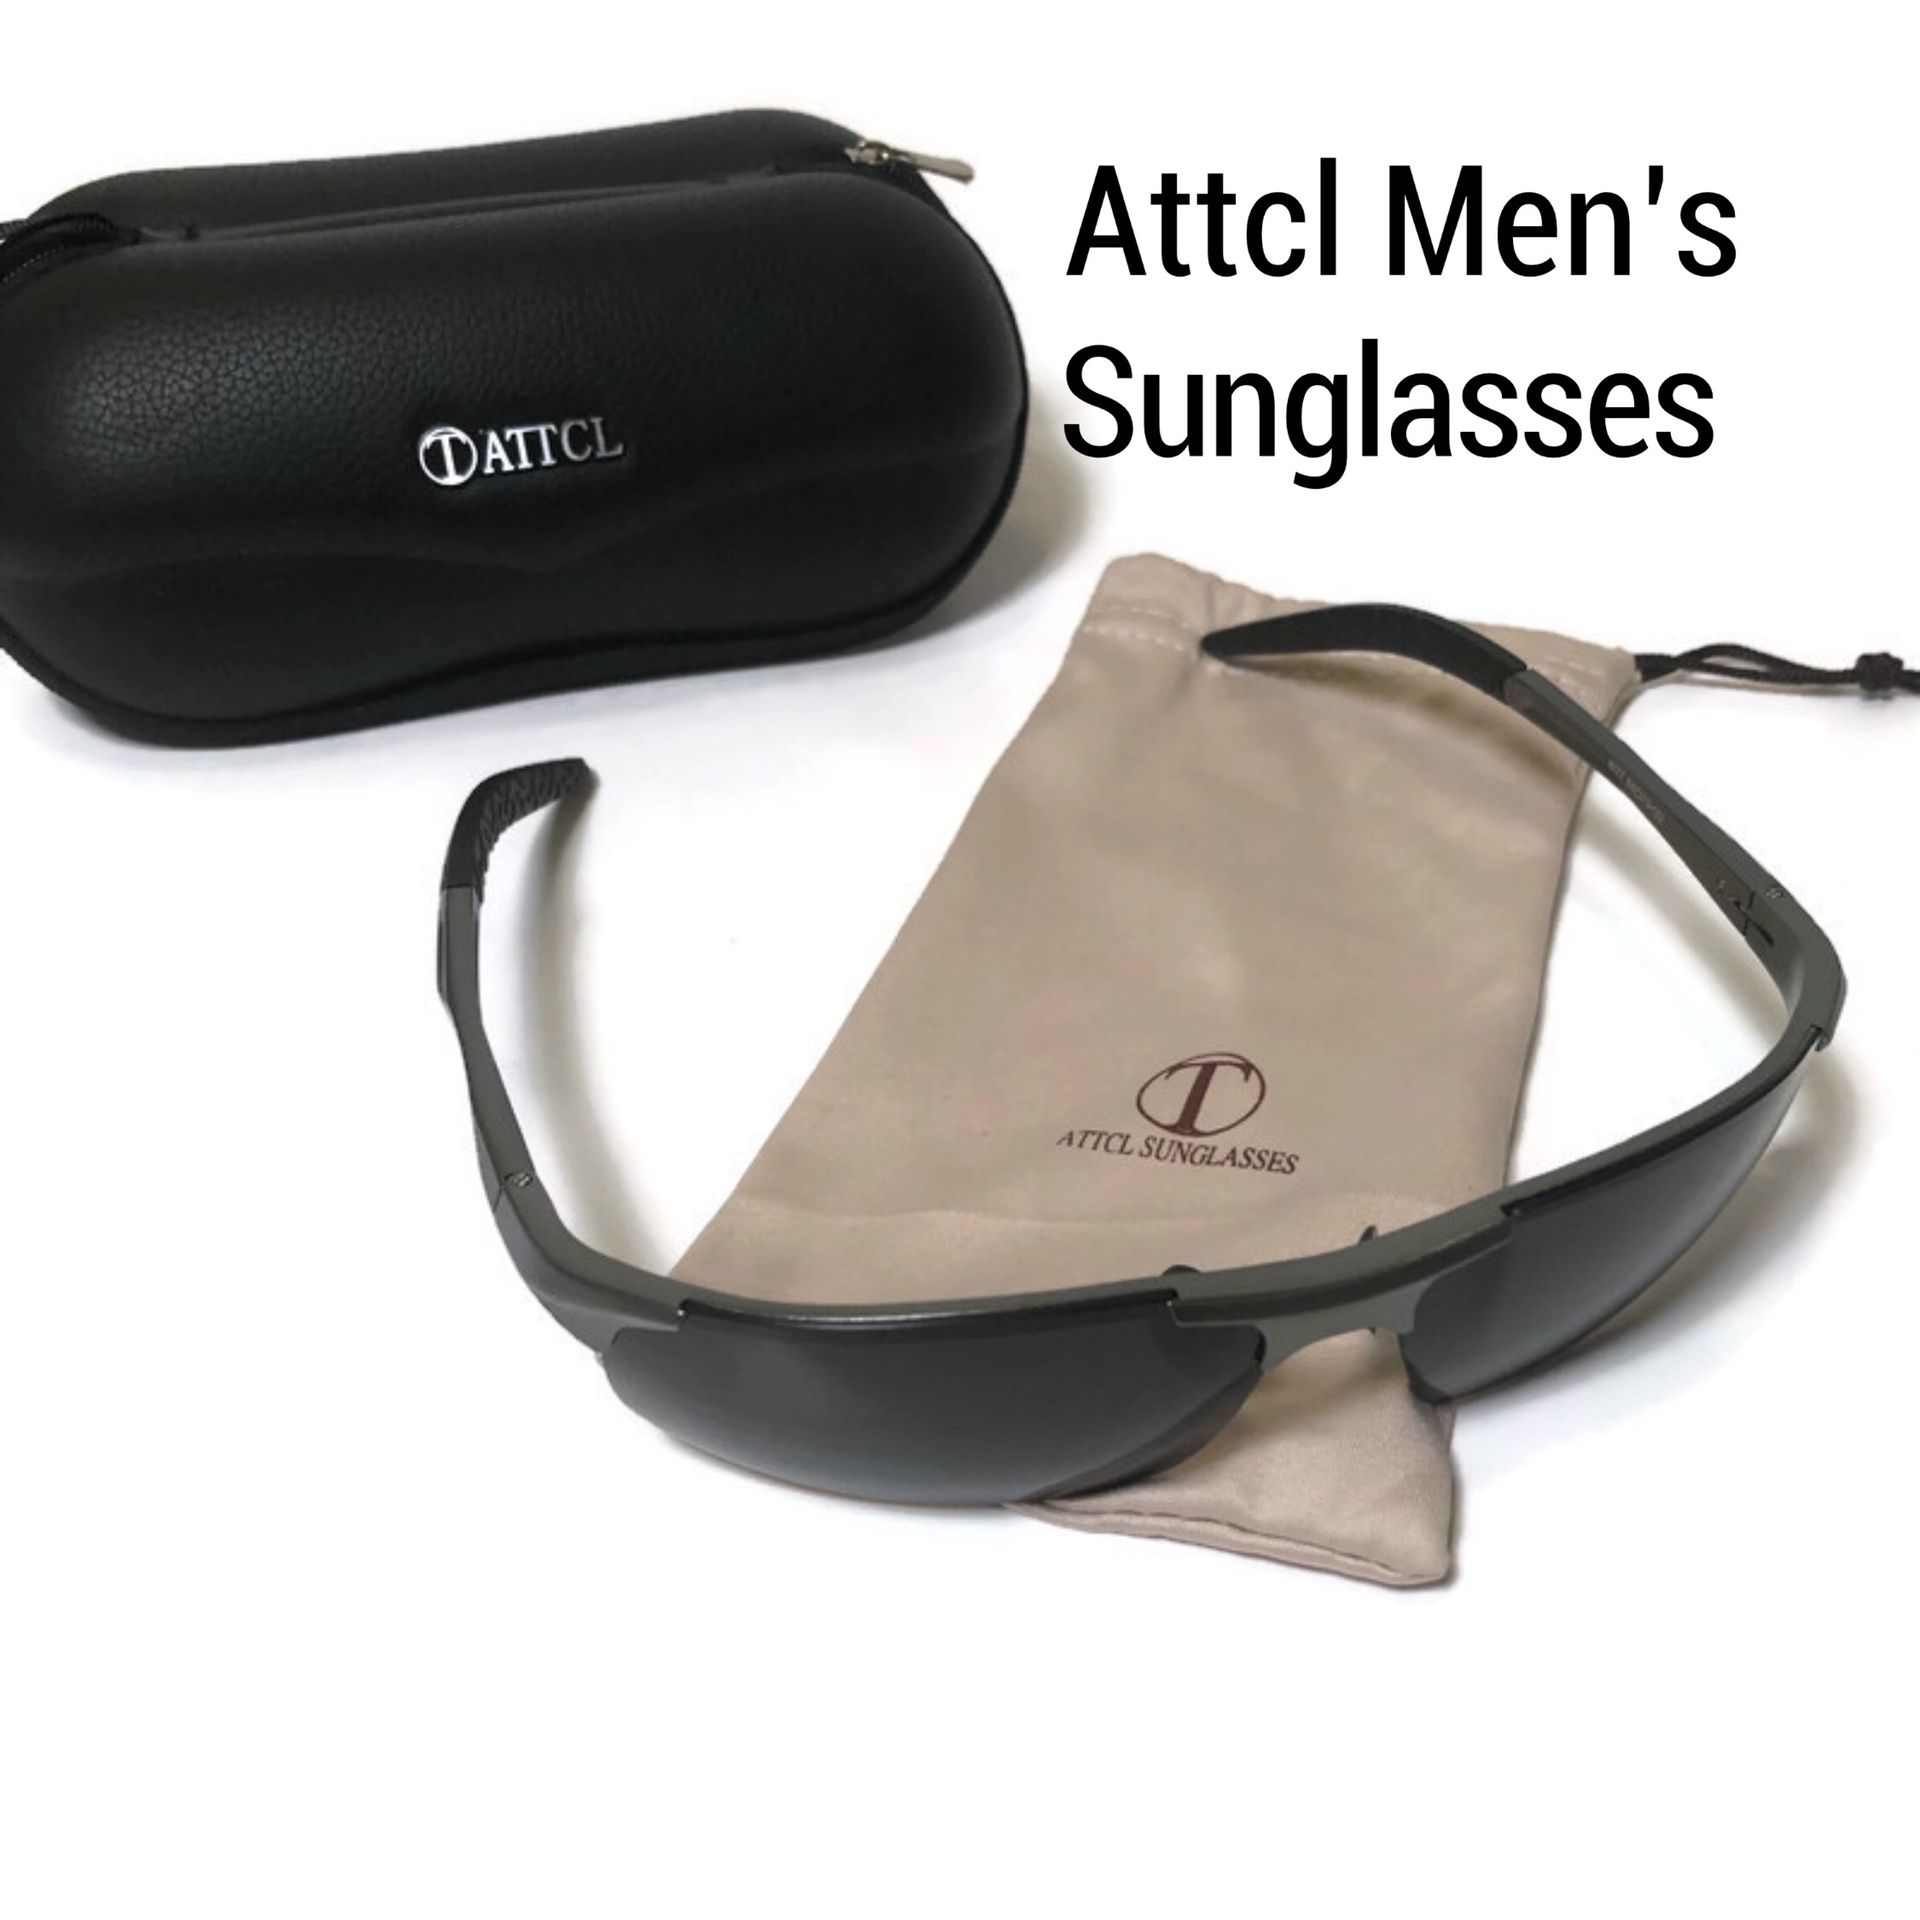 Attcl men’s sunglasses- model 8177